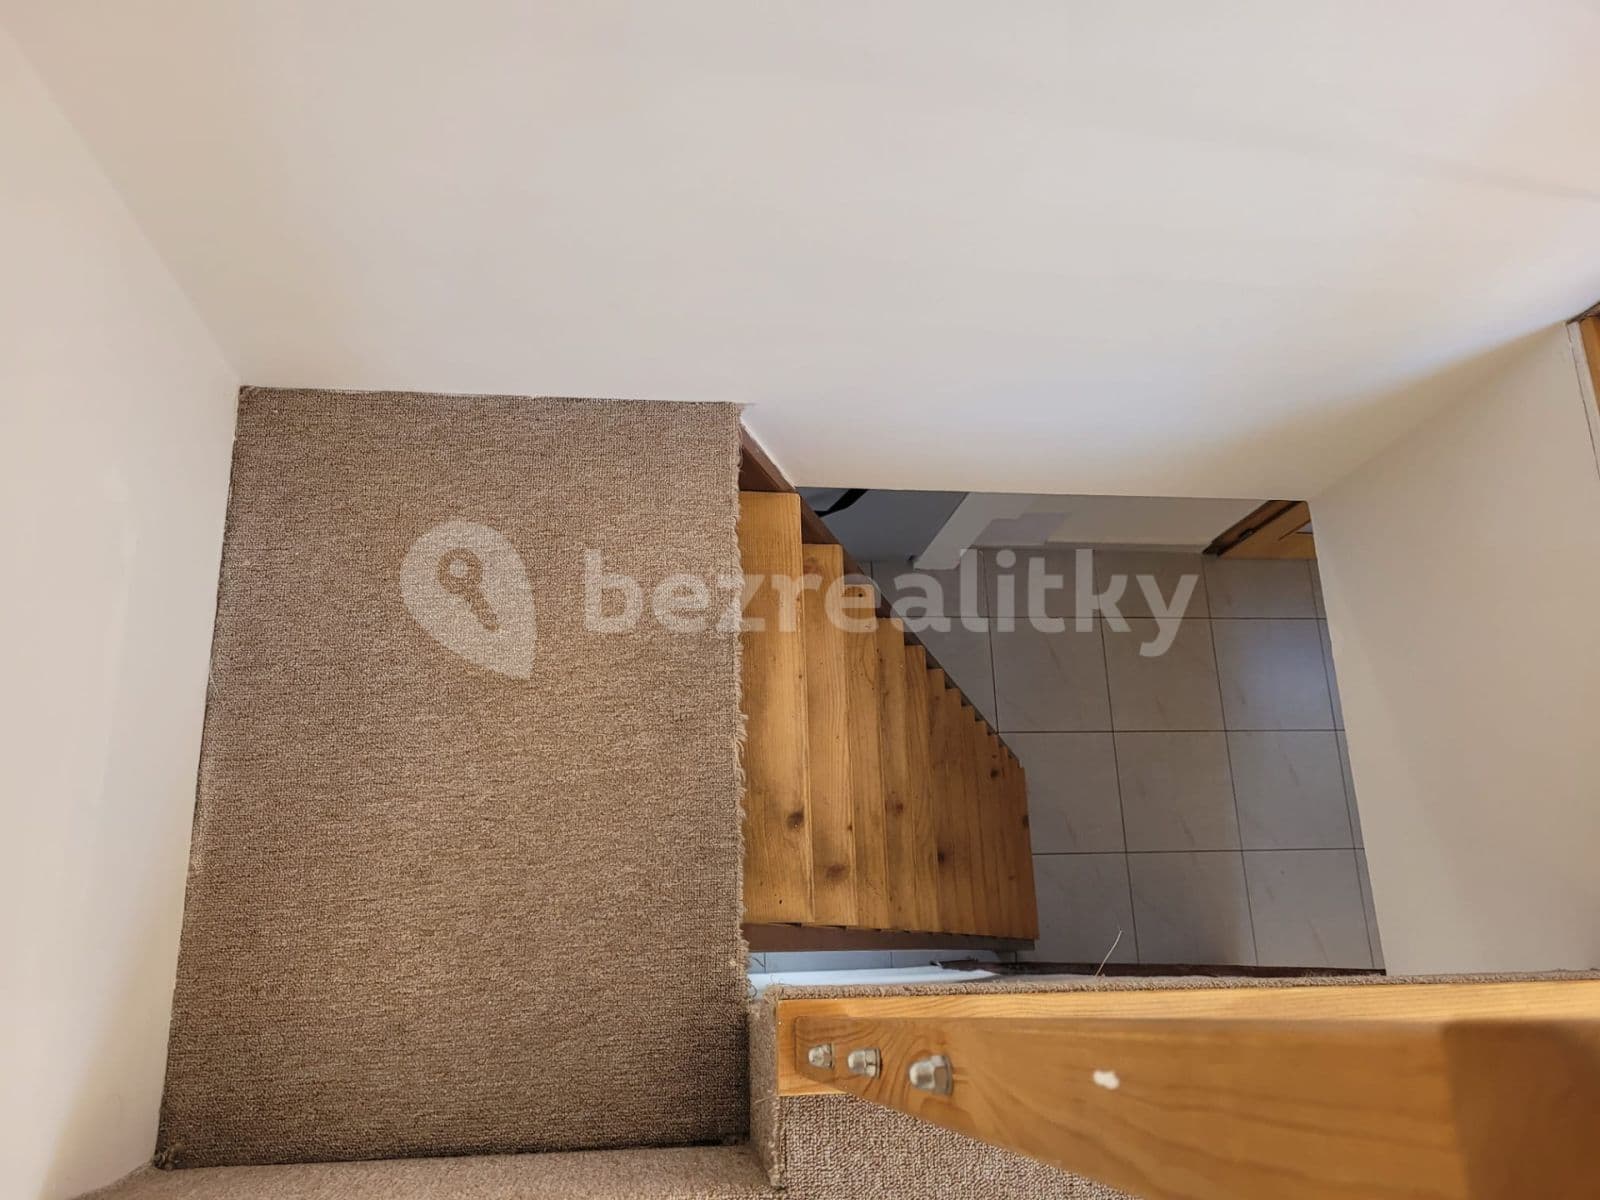 3 bedroom flat to rent, 65 m², Havlovská, Prague, Prague